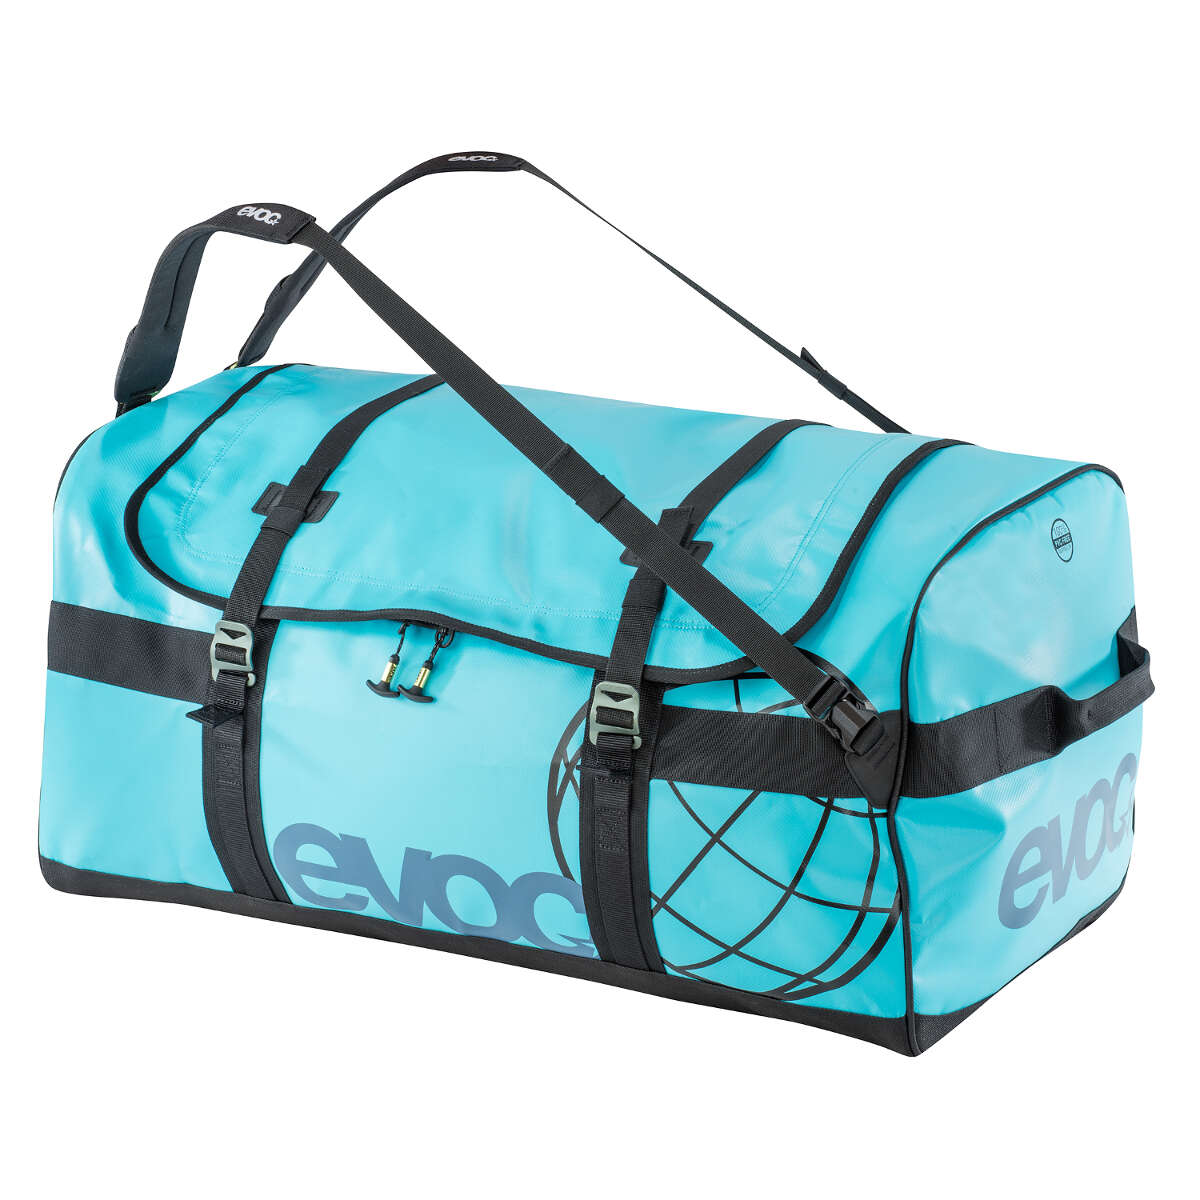 Evoc Borsa da Viaggio Duffle Bag Neon Blu, 100 Litri